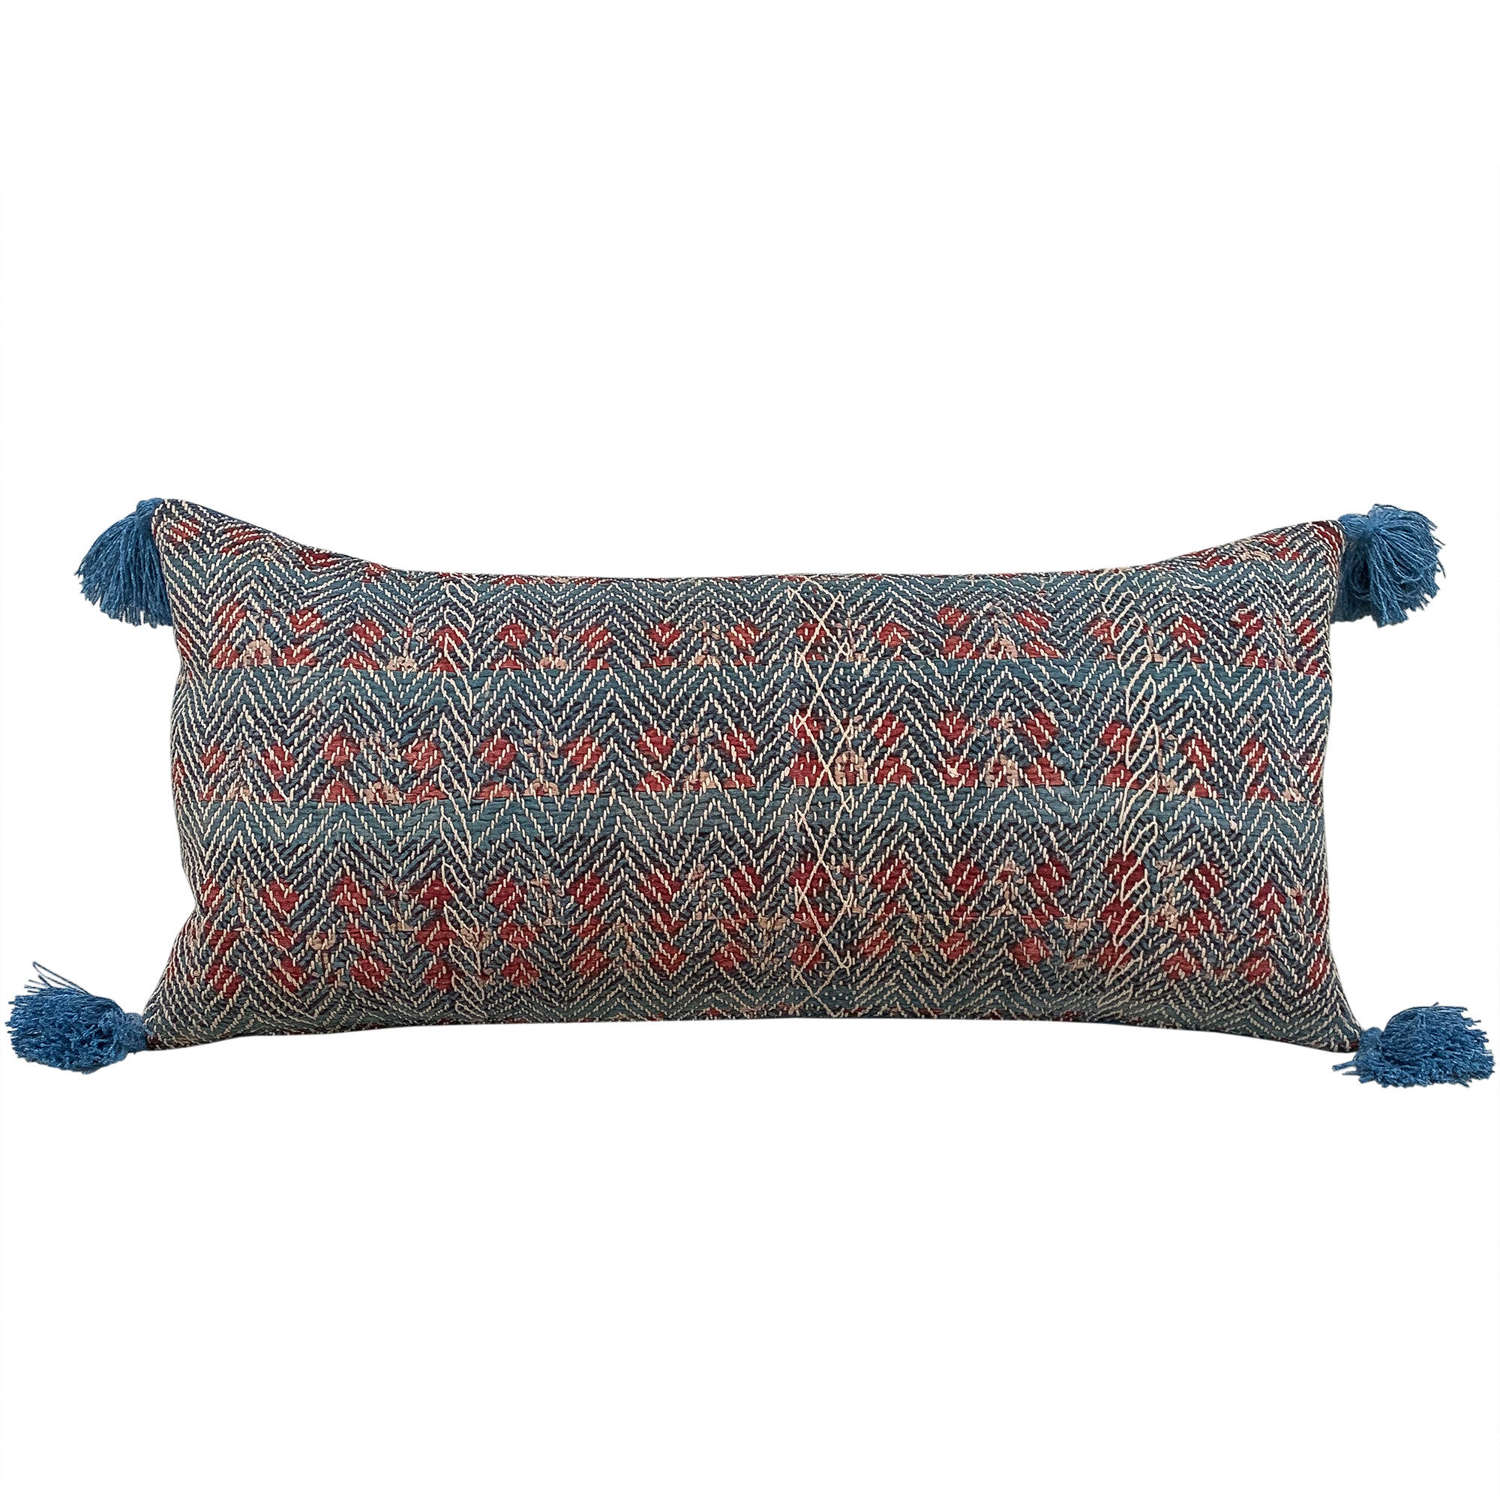 Banjara cushion with blue tassels